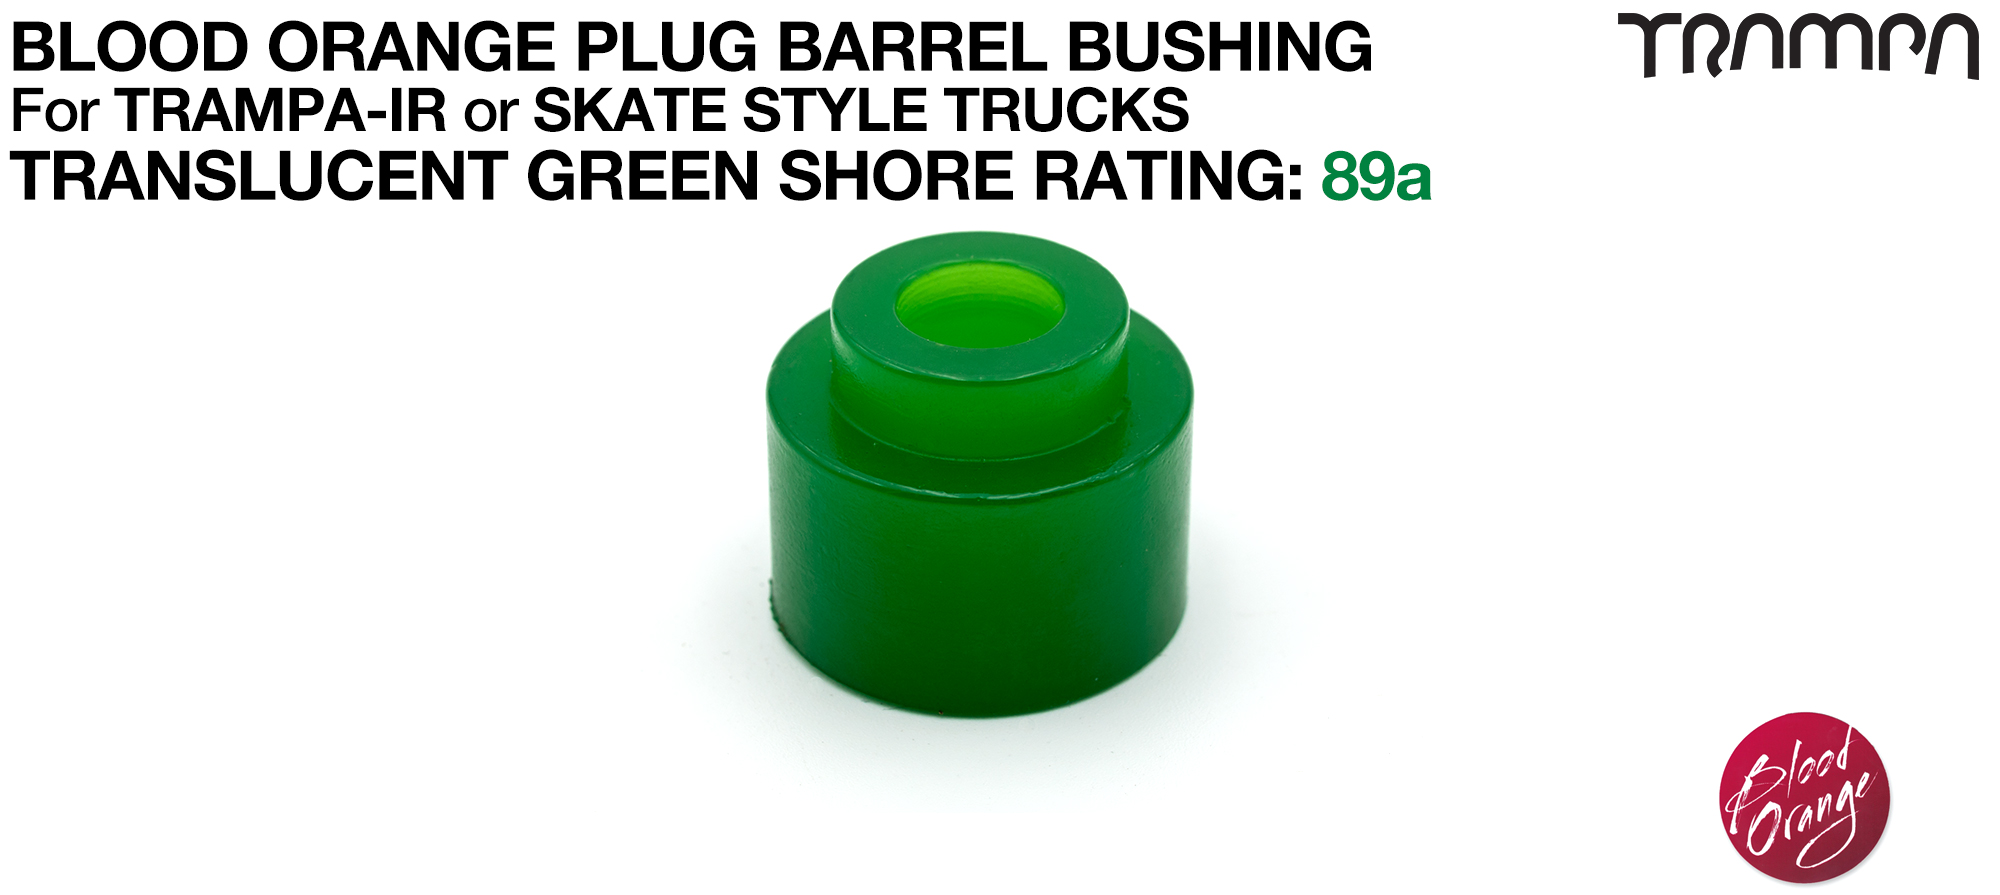 PLUG BARREL Bushings TRANSLUCENT GREEN - 89a 